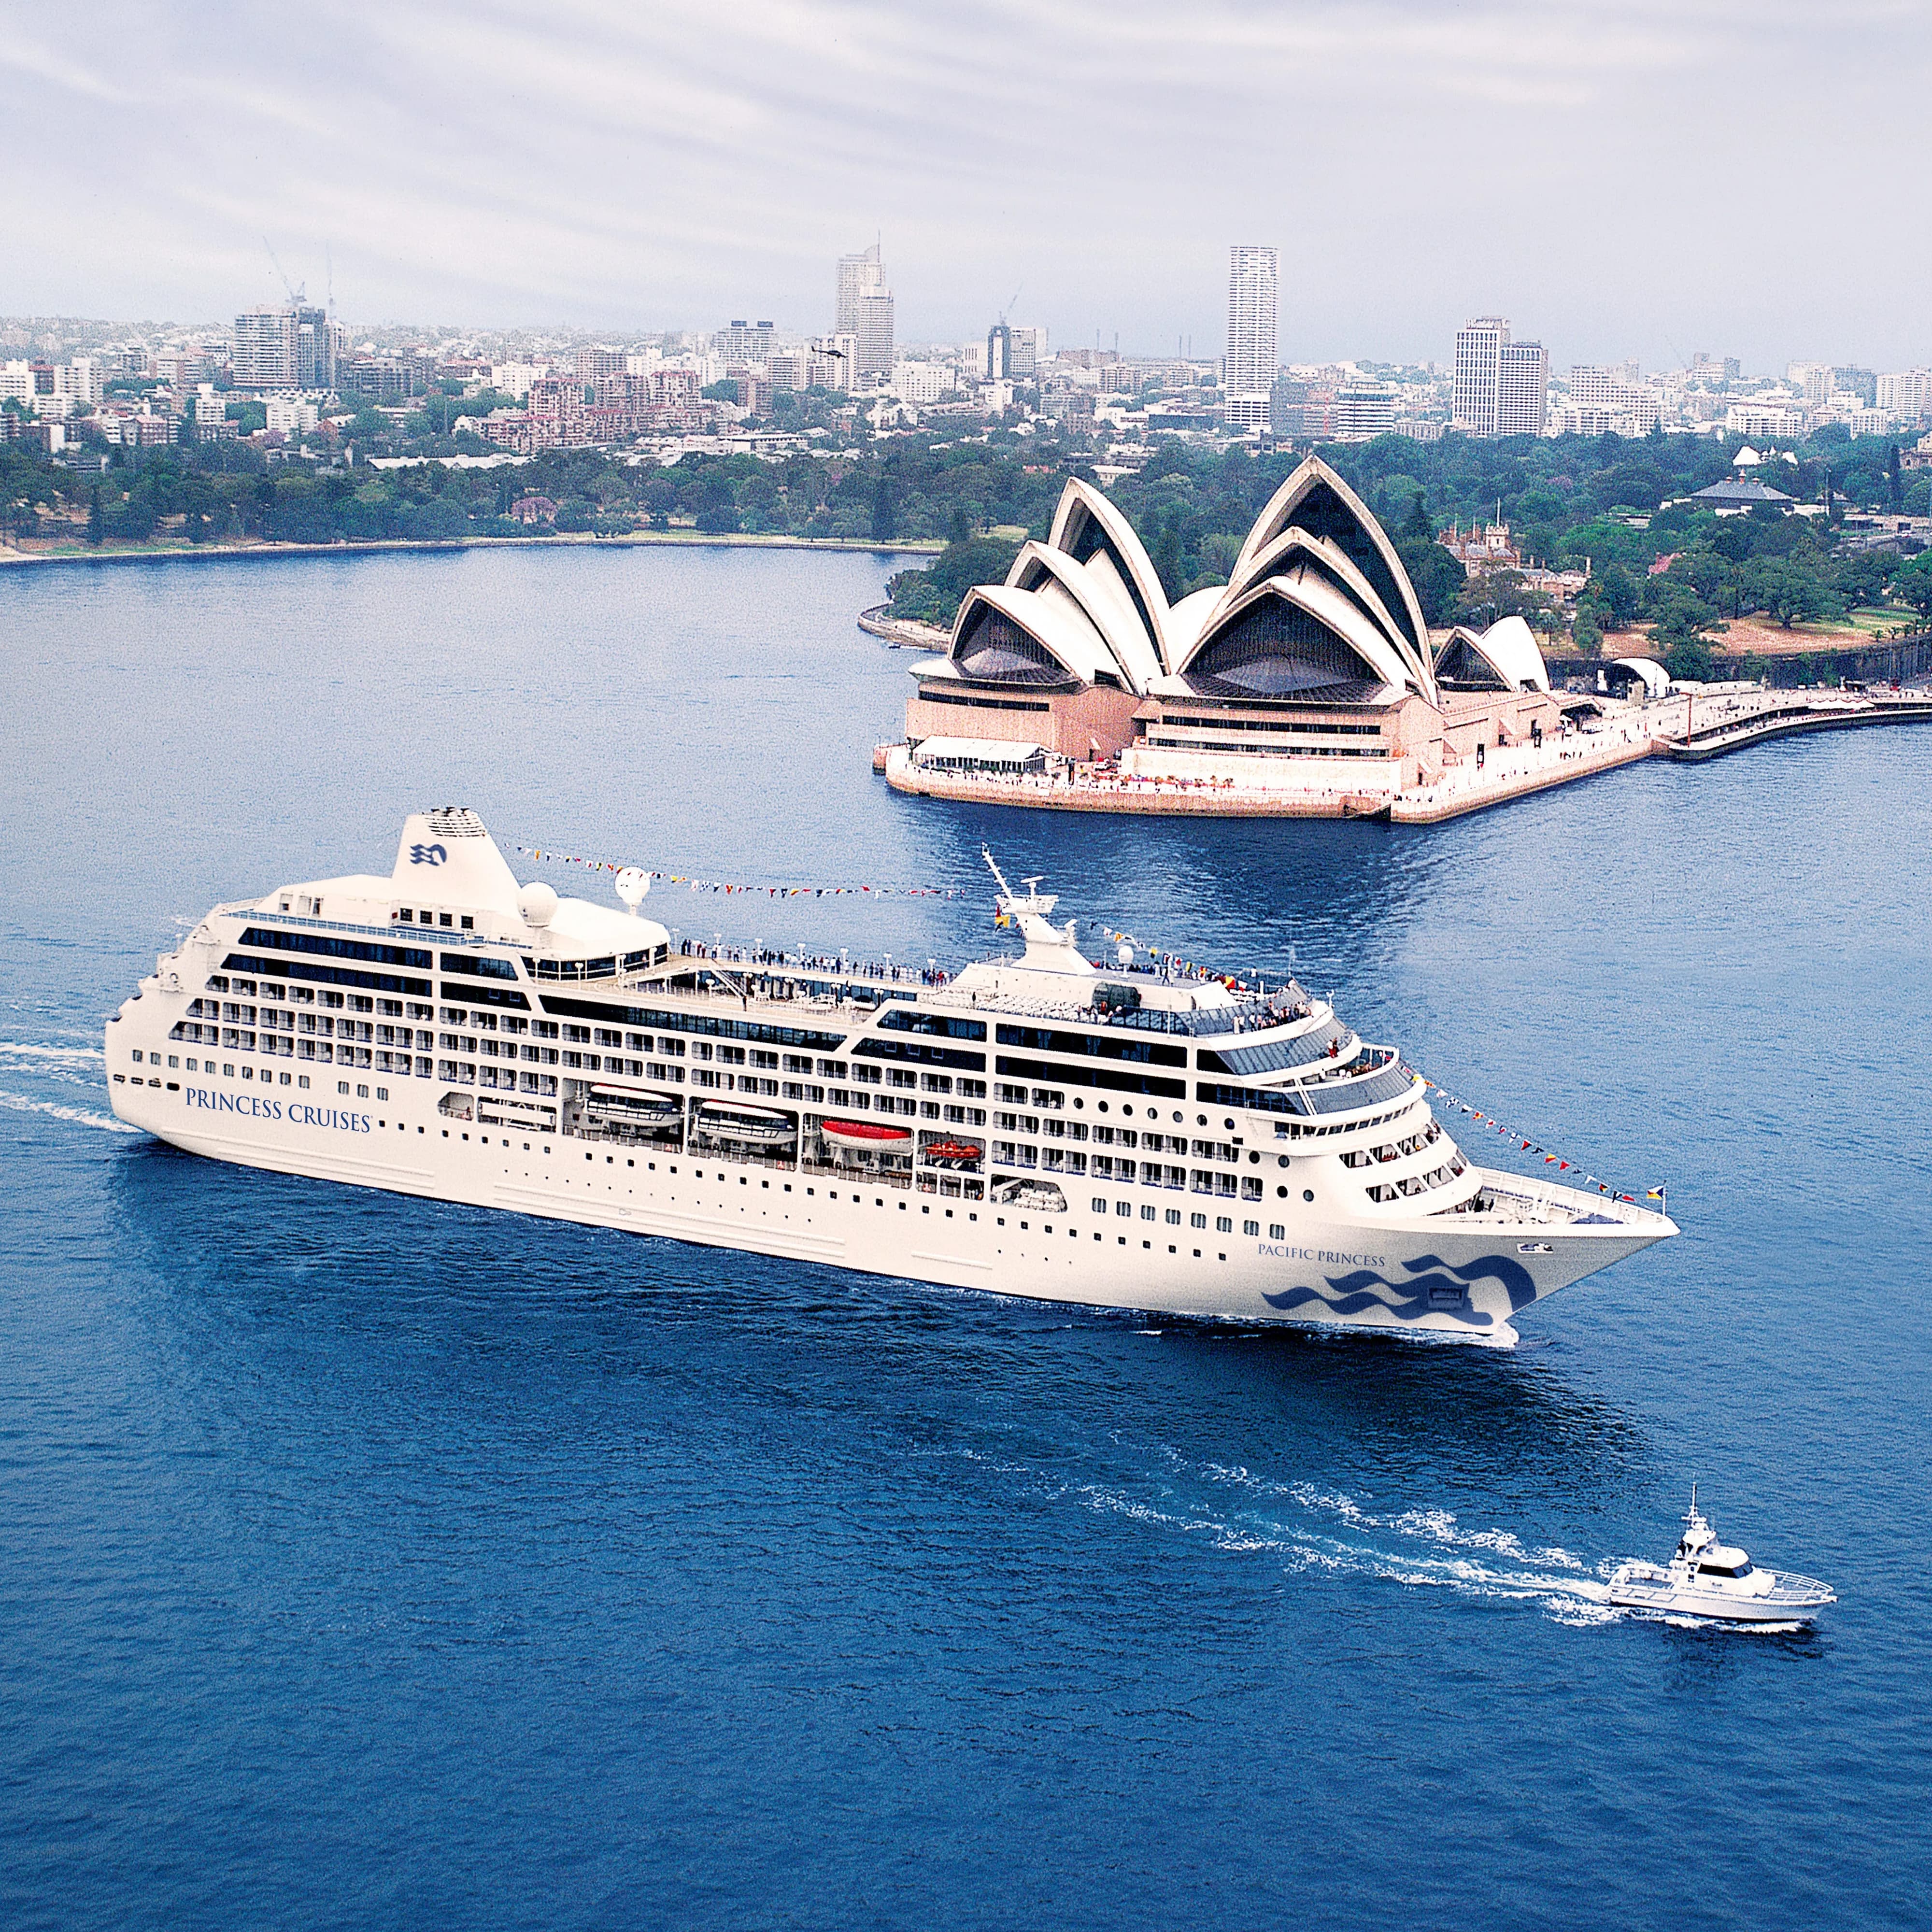 Princess Cruises cruise ship in Sydney, Australia